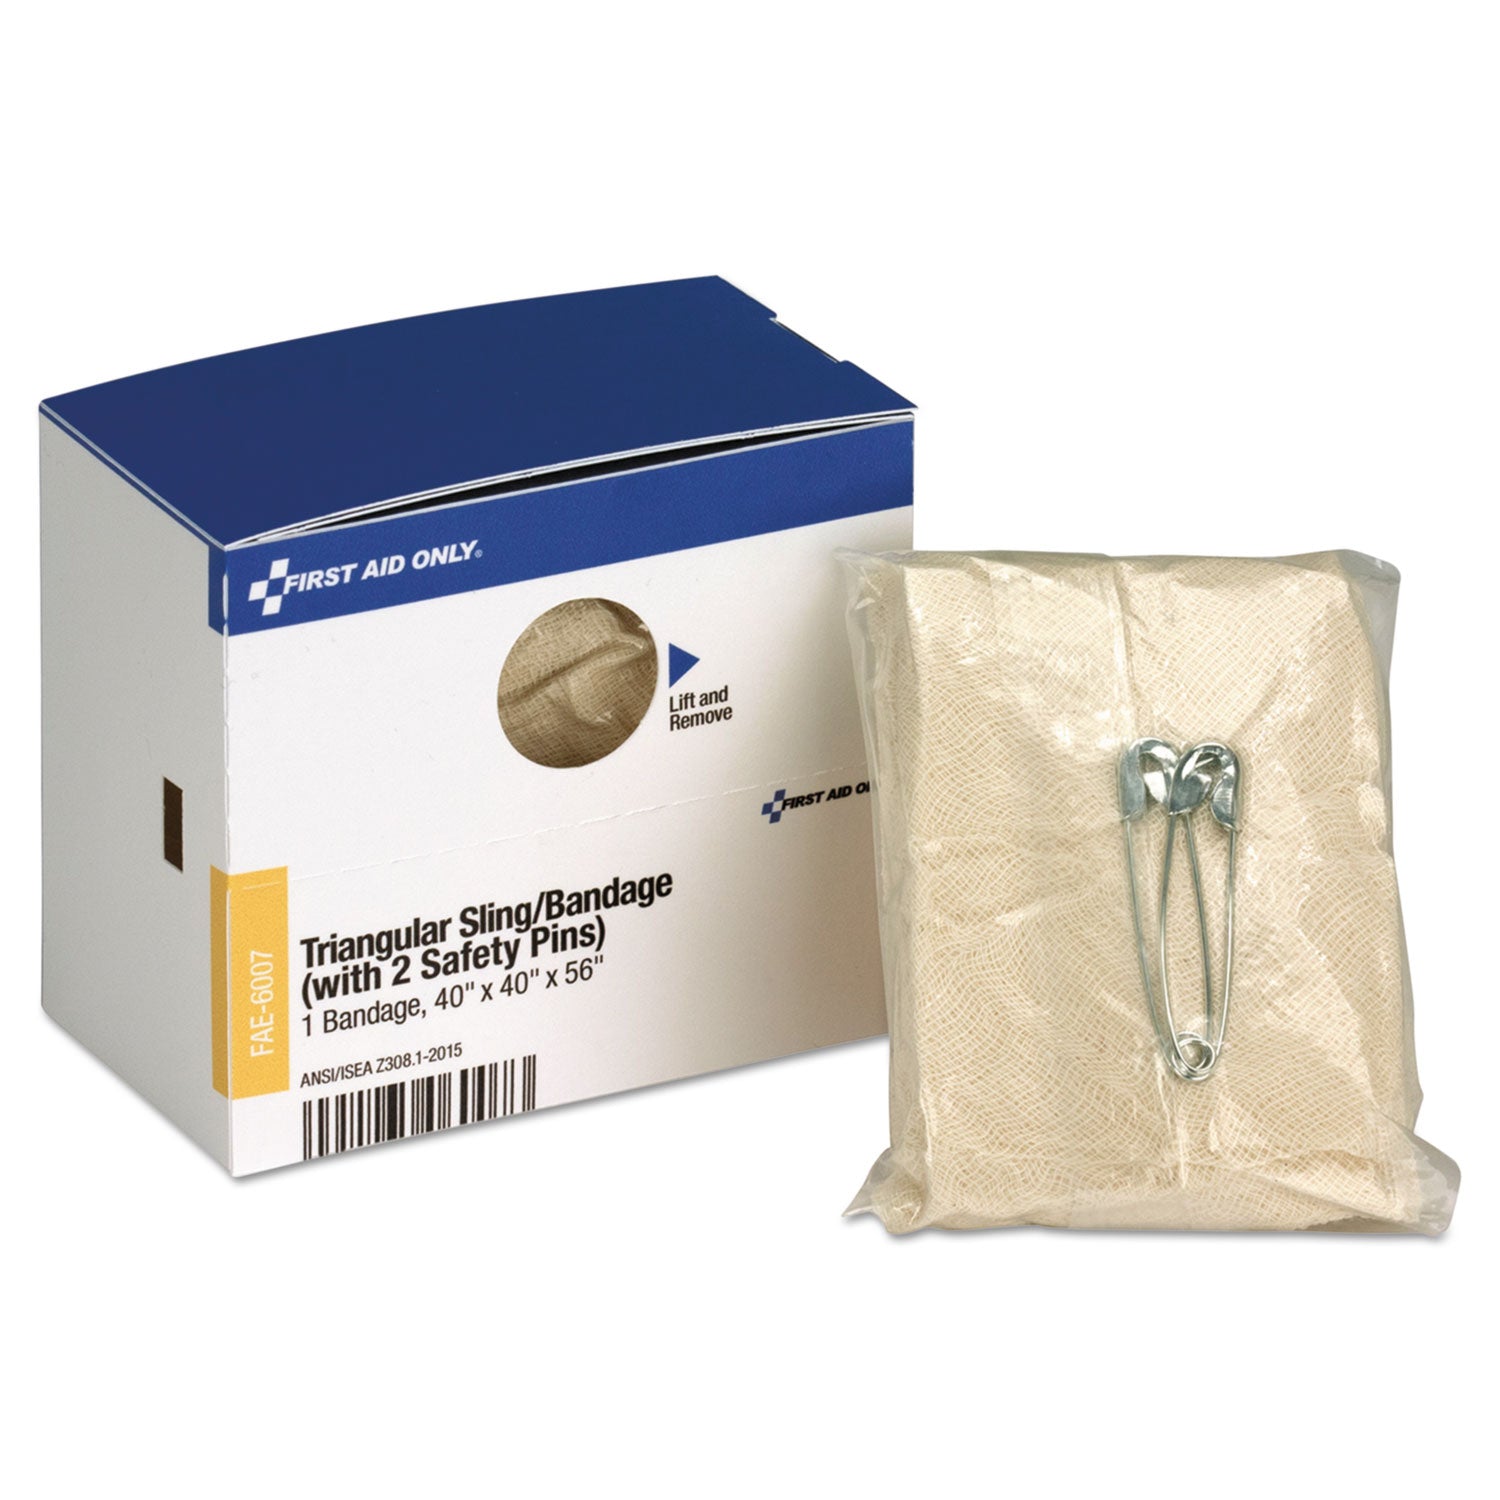 SmartCompliance Triangular Sling/Bandage, 40 x 40 x 56 - 